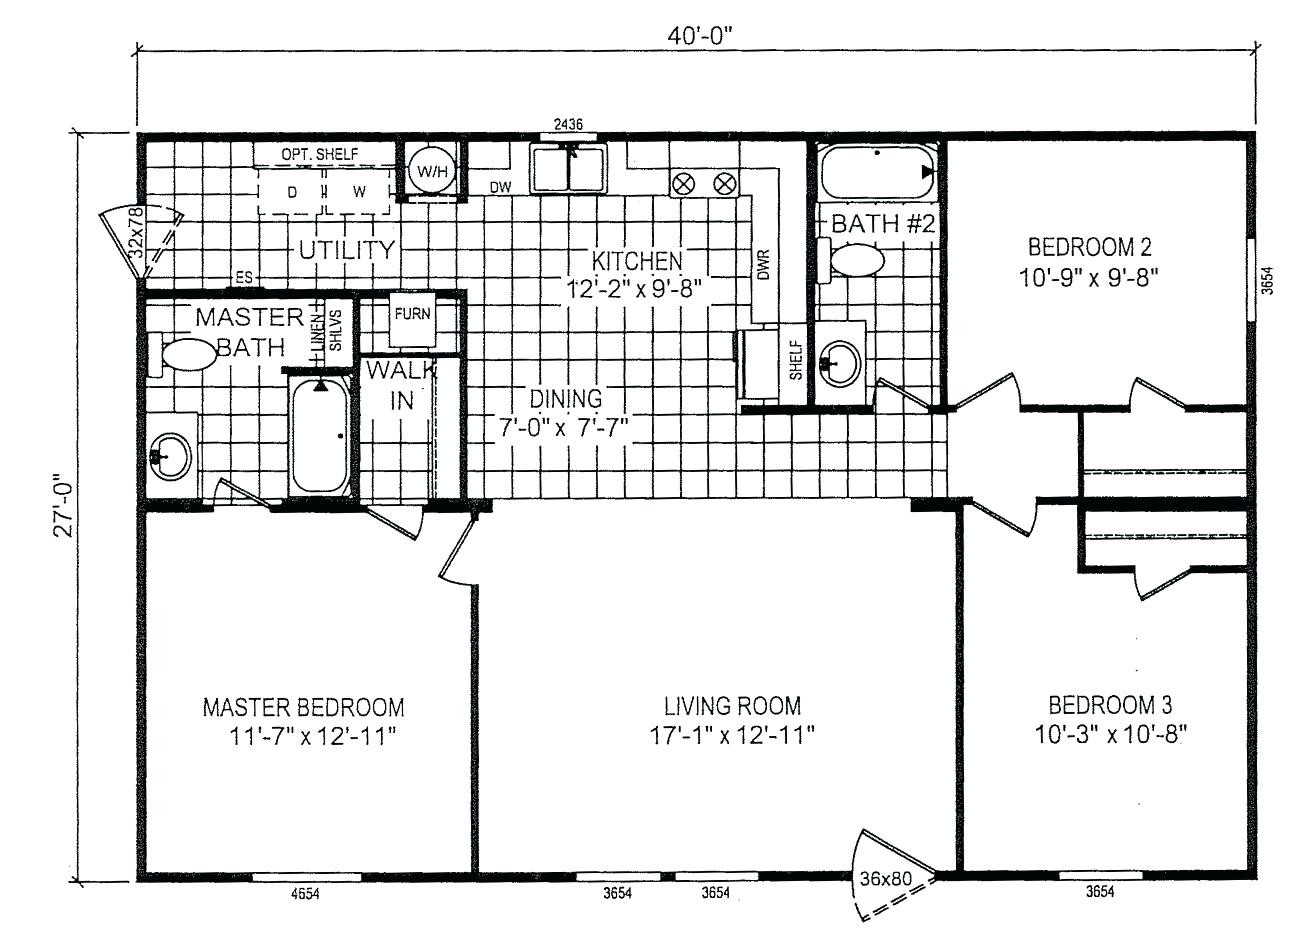 Fleetwood Mobile Home Floor Plans - Carpet Vidalondon